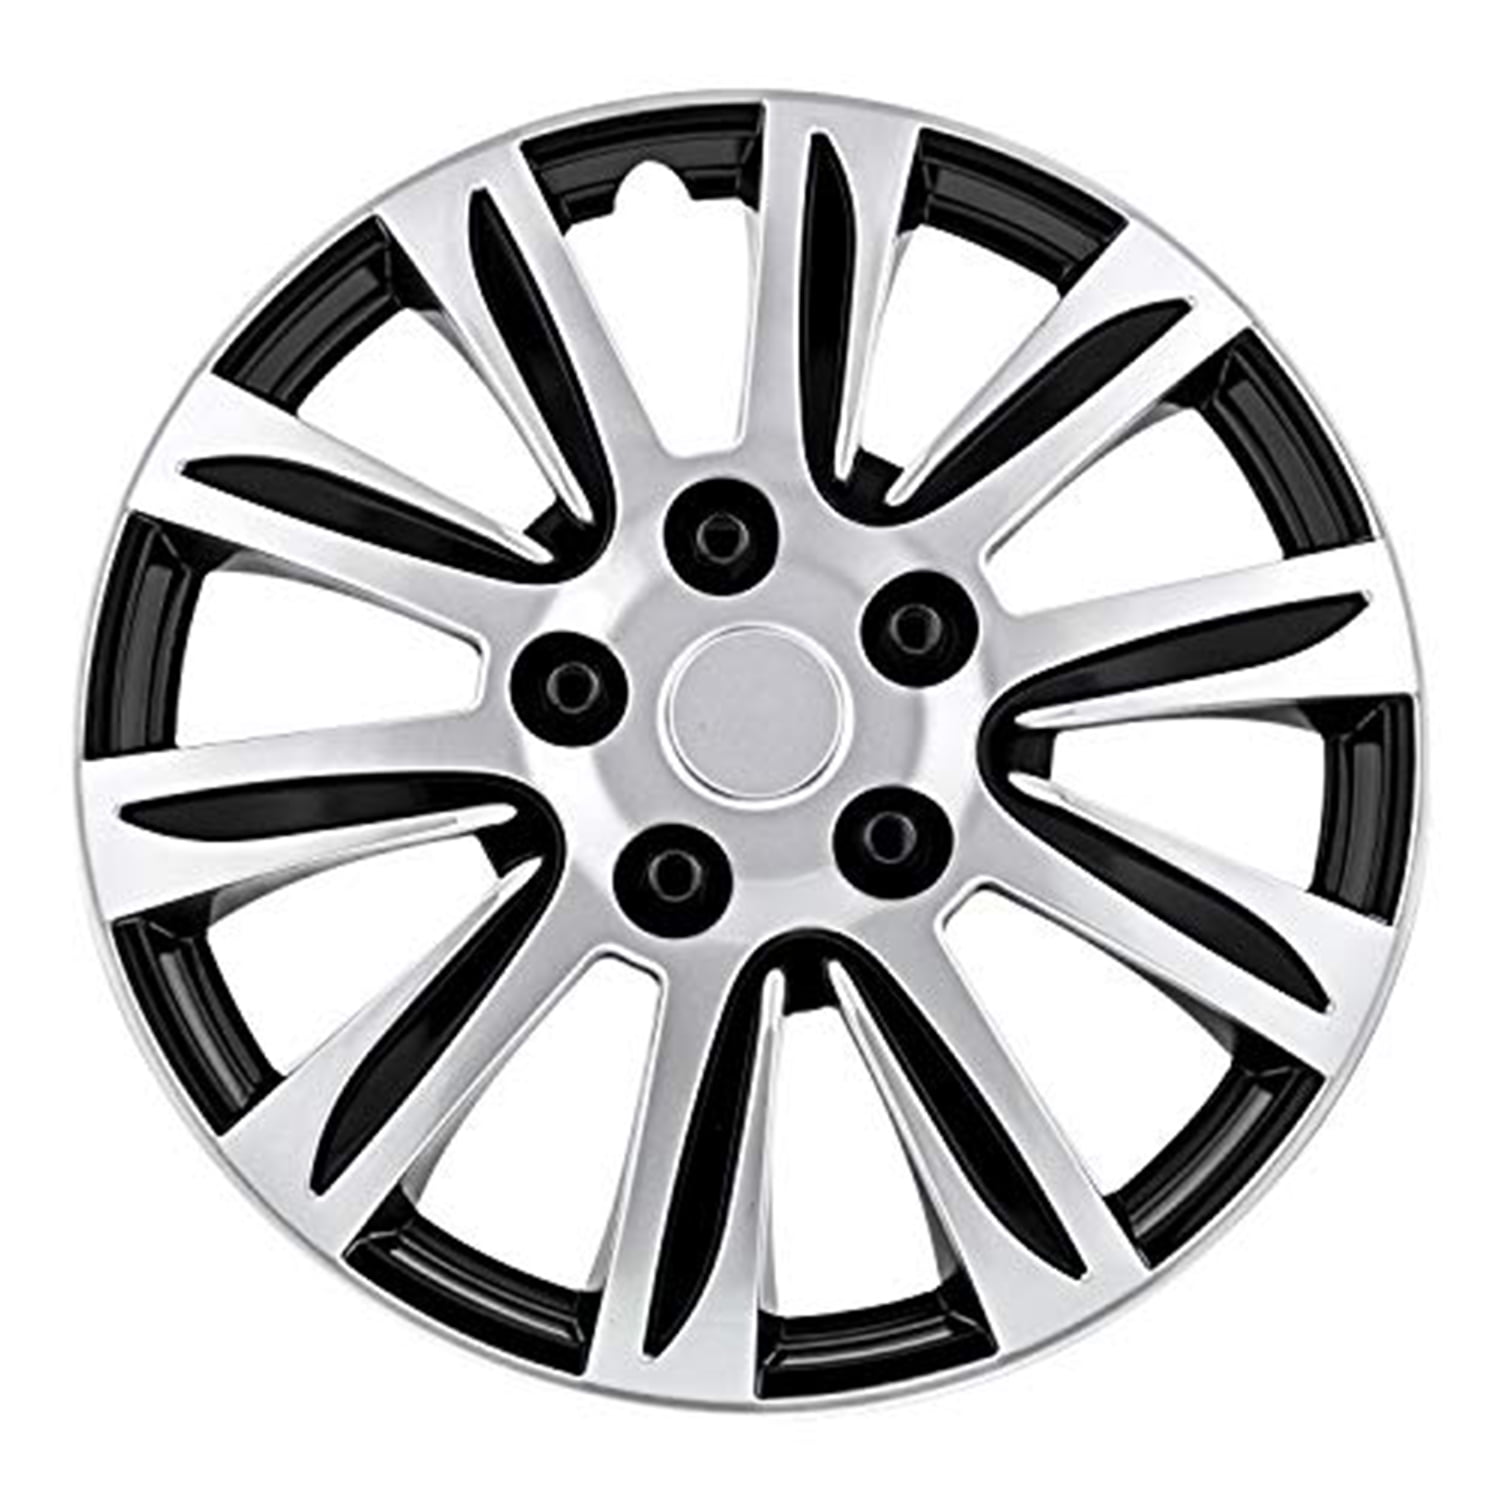 Wheel cover set Volkswagen Polo 14 inch 4 pcs